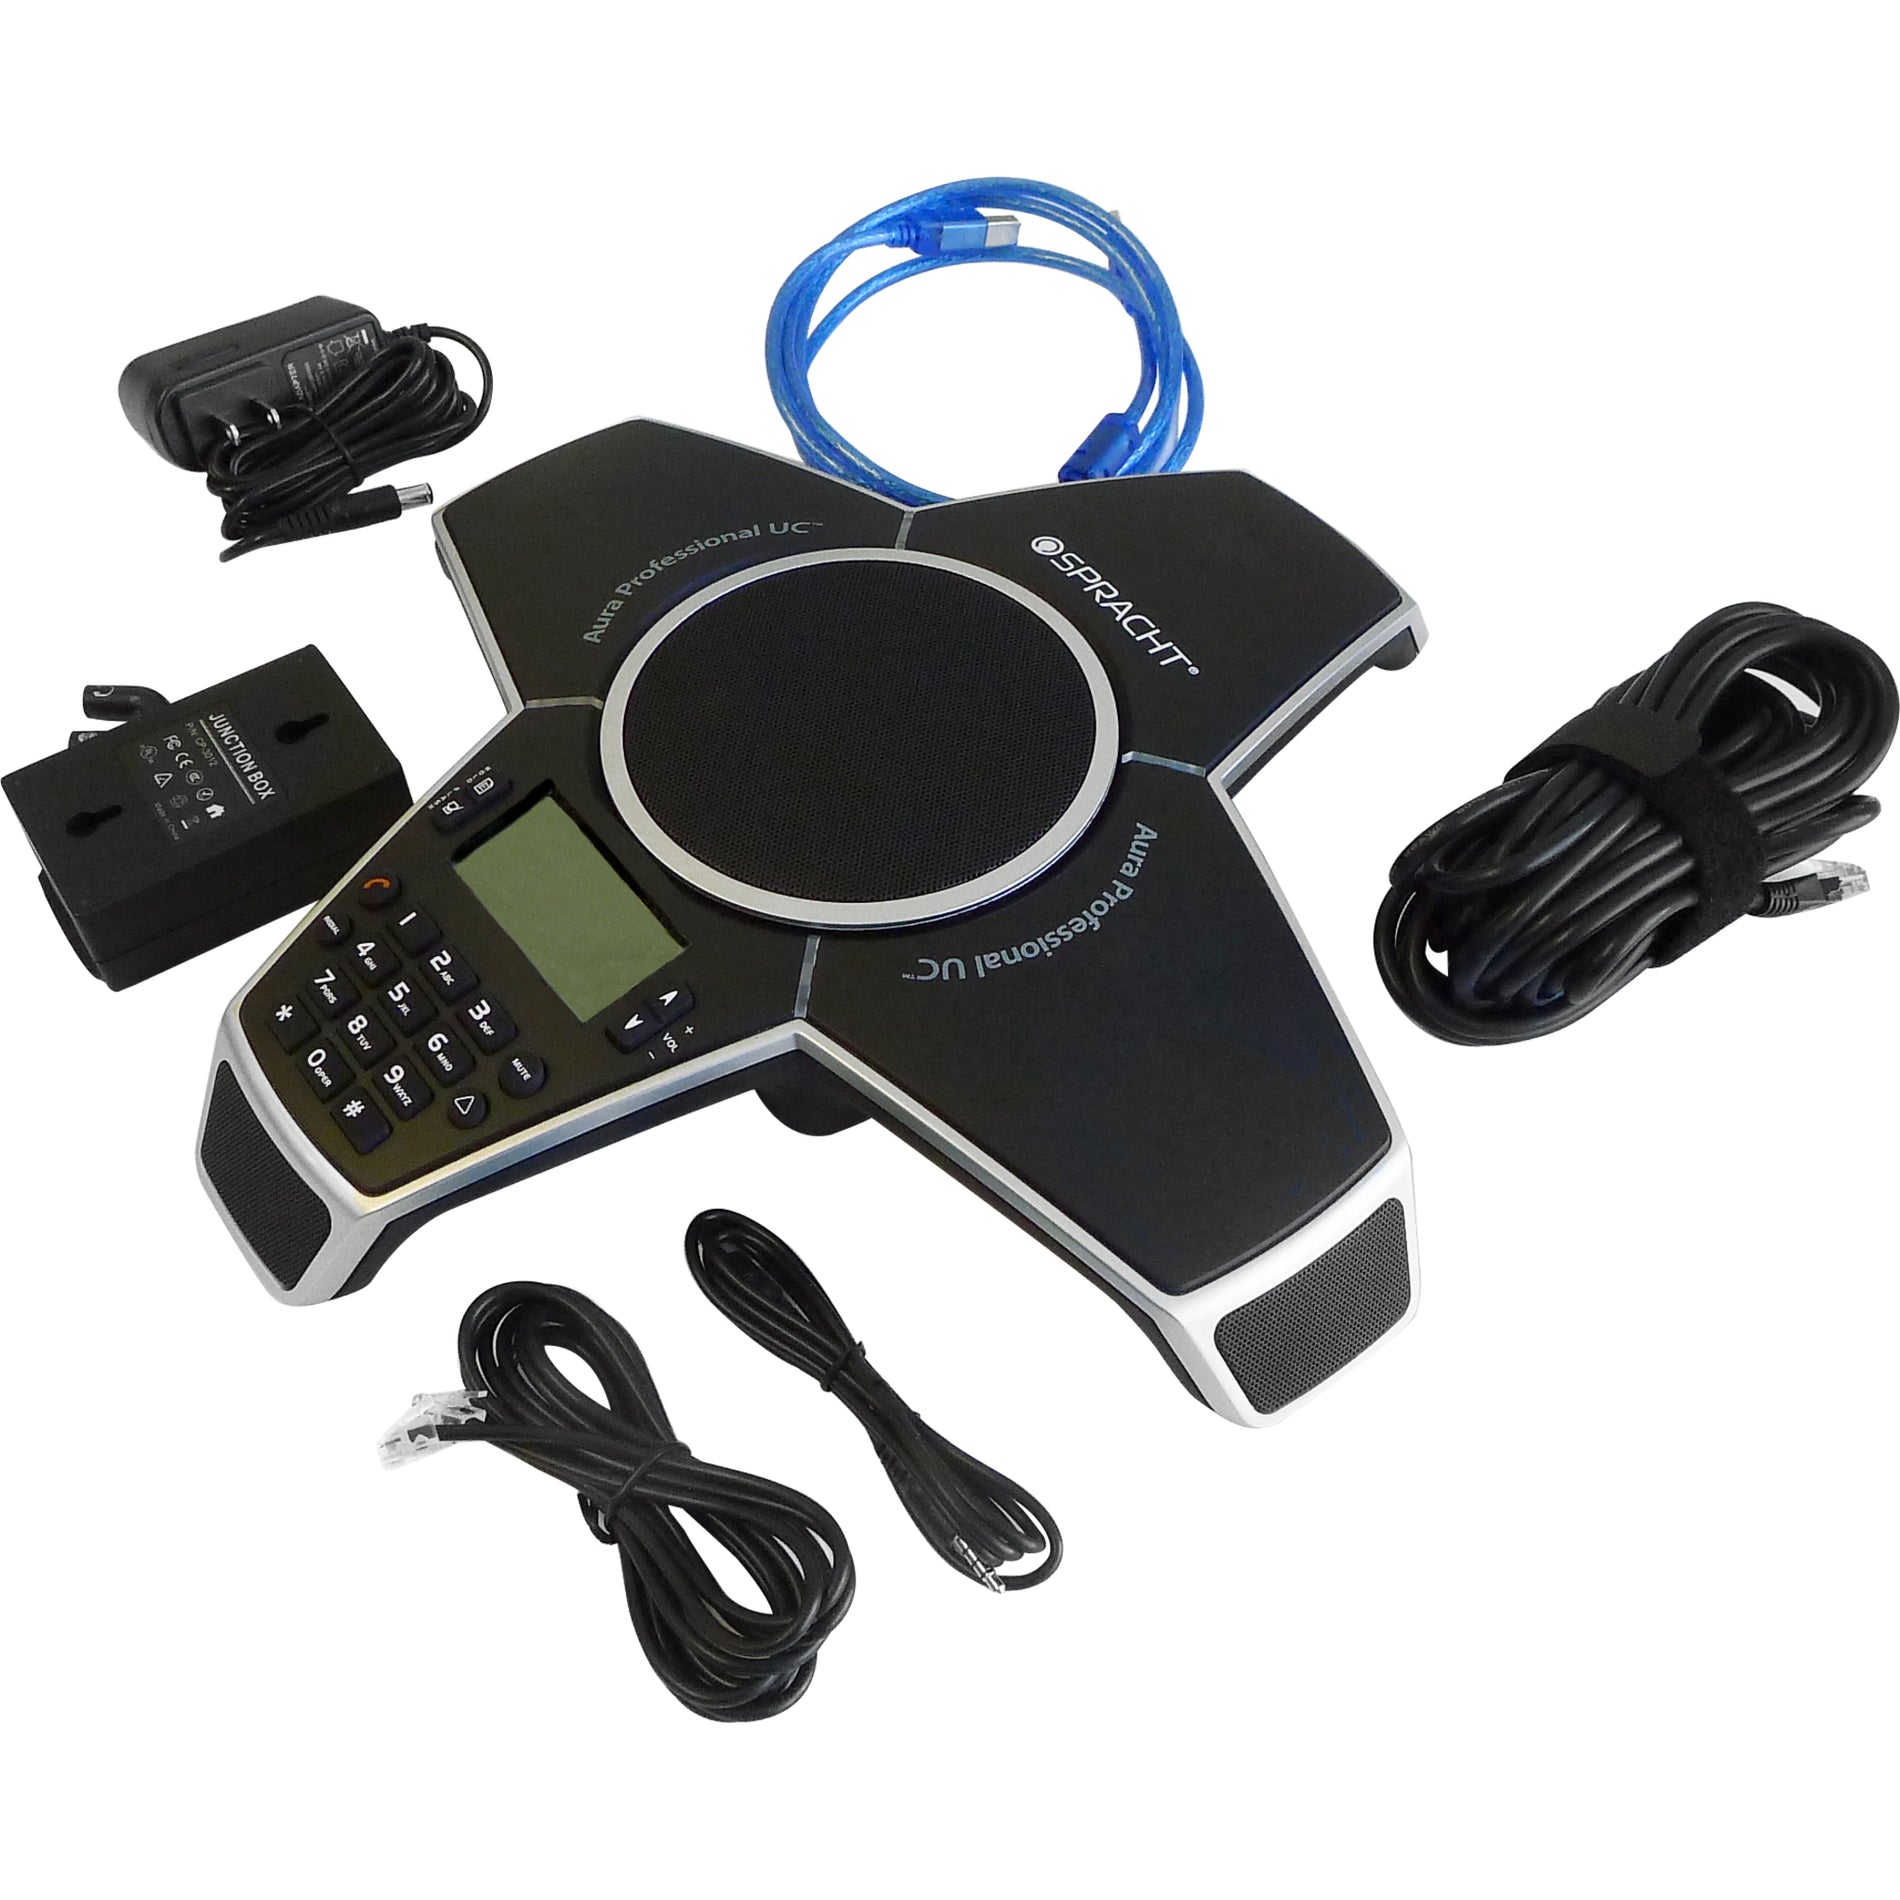 Spracht CP-3012 Aura Professional-UC Conference Phone, USB, Caller ID, Speakerphone